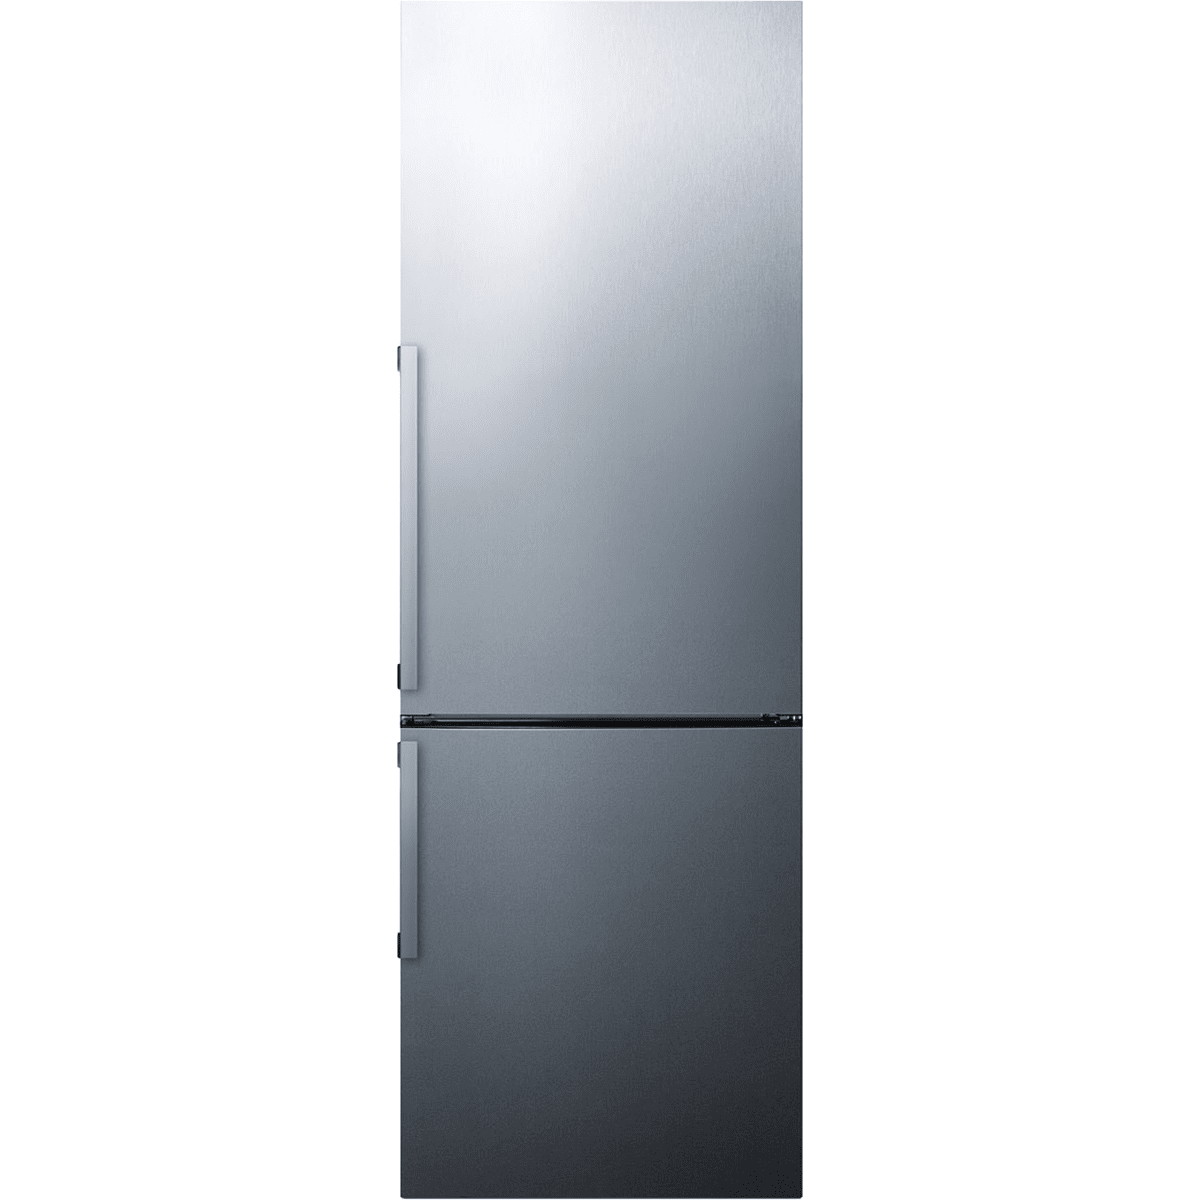 SUMMIT 11.35 Cu. Ft. Energy Star Refrigerator w/ Bottom Freezer